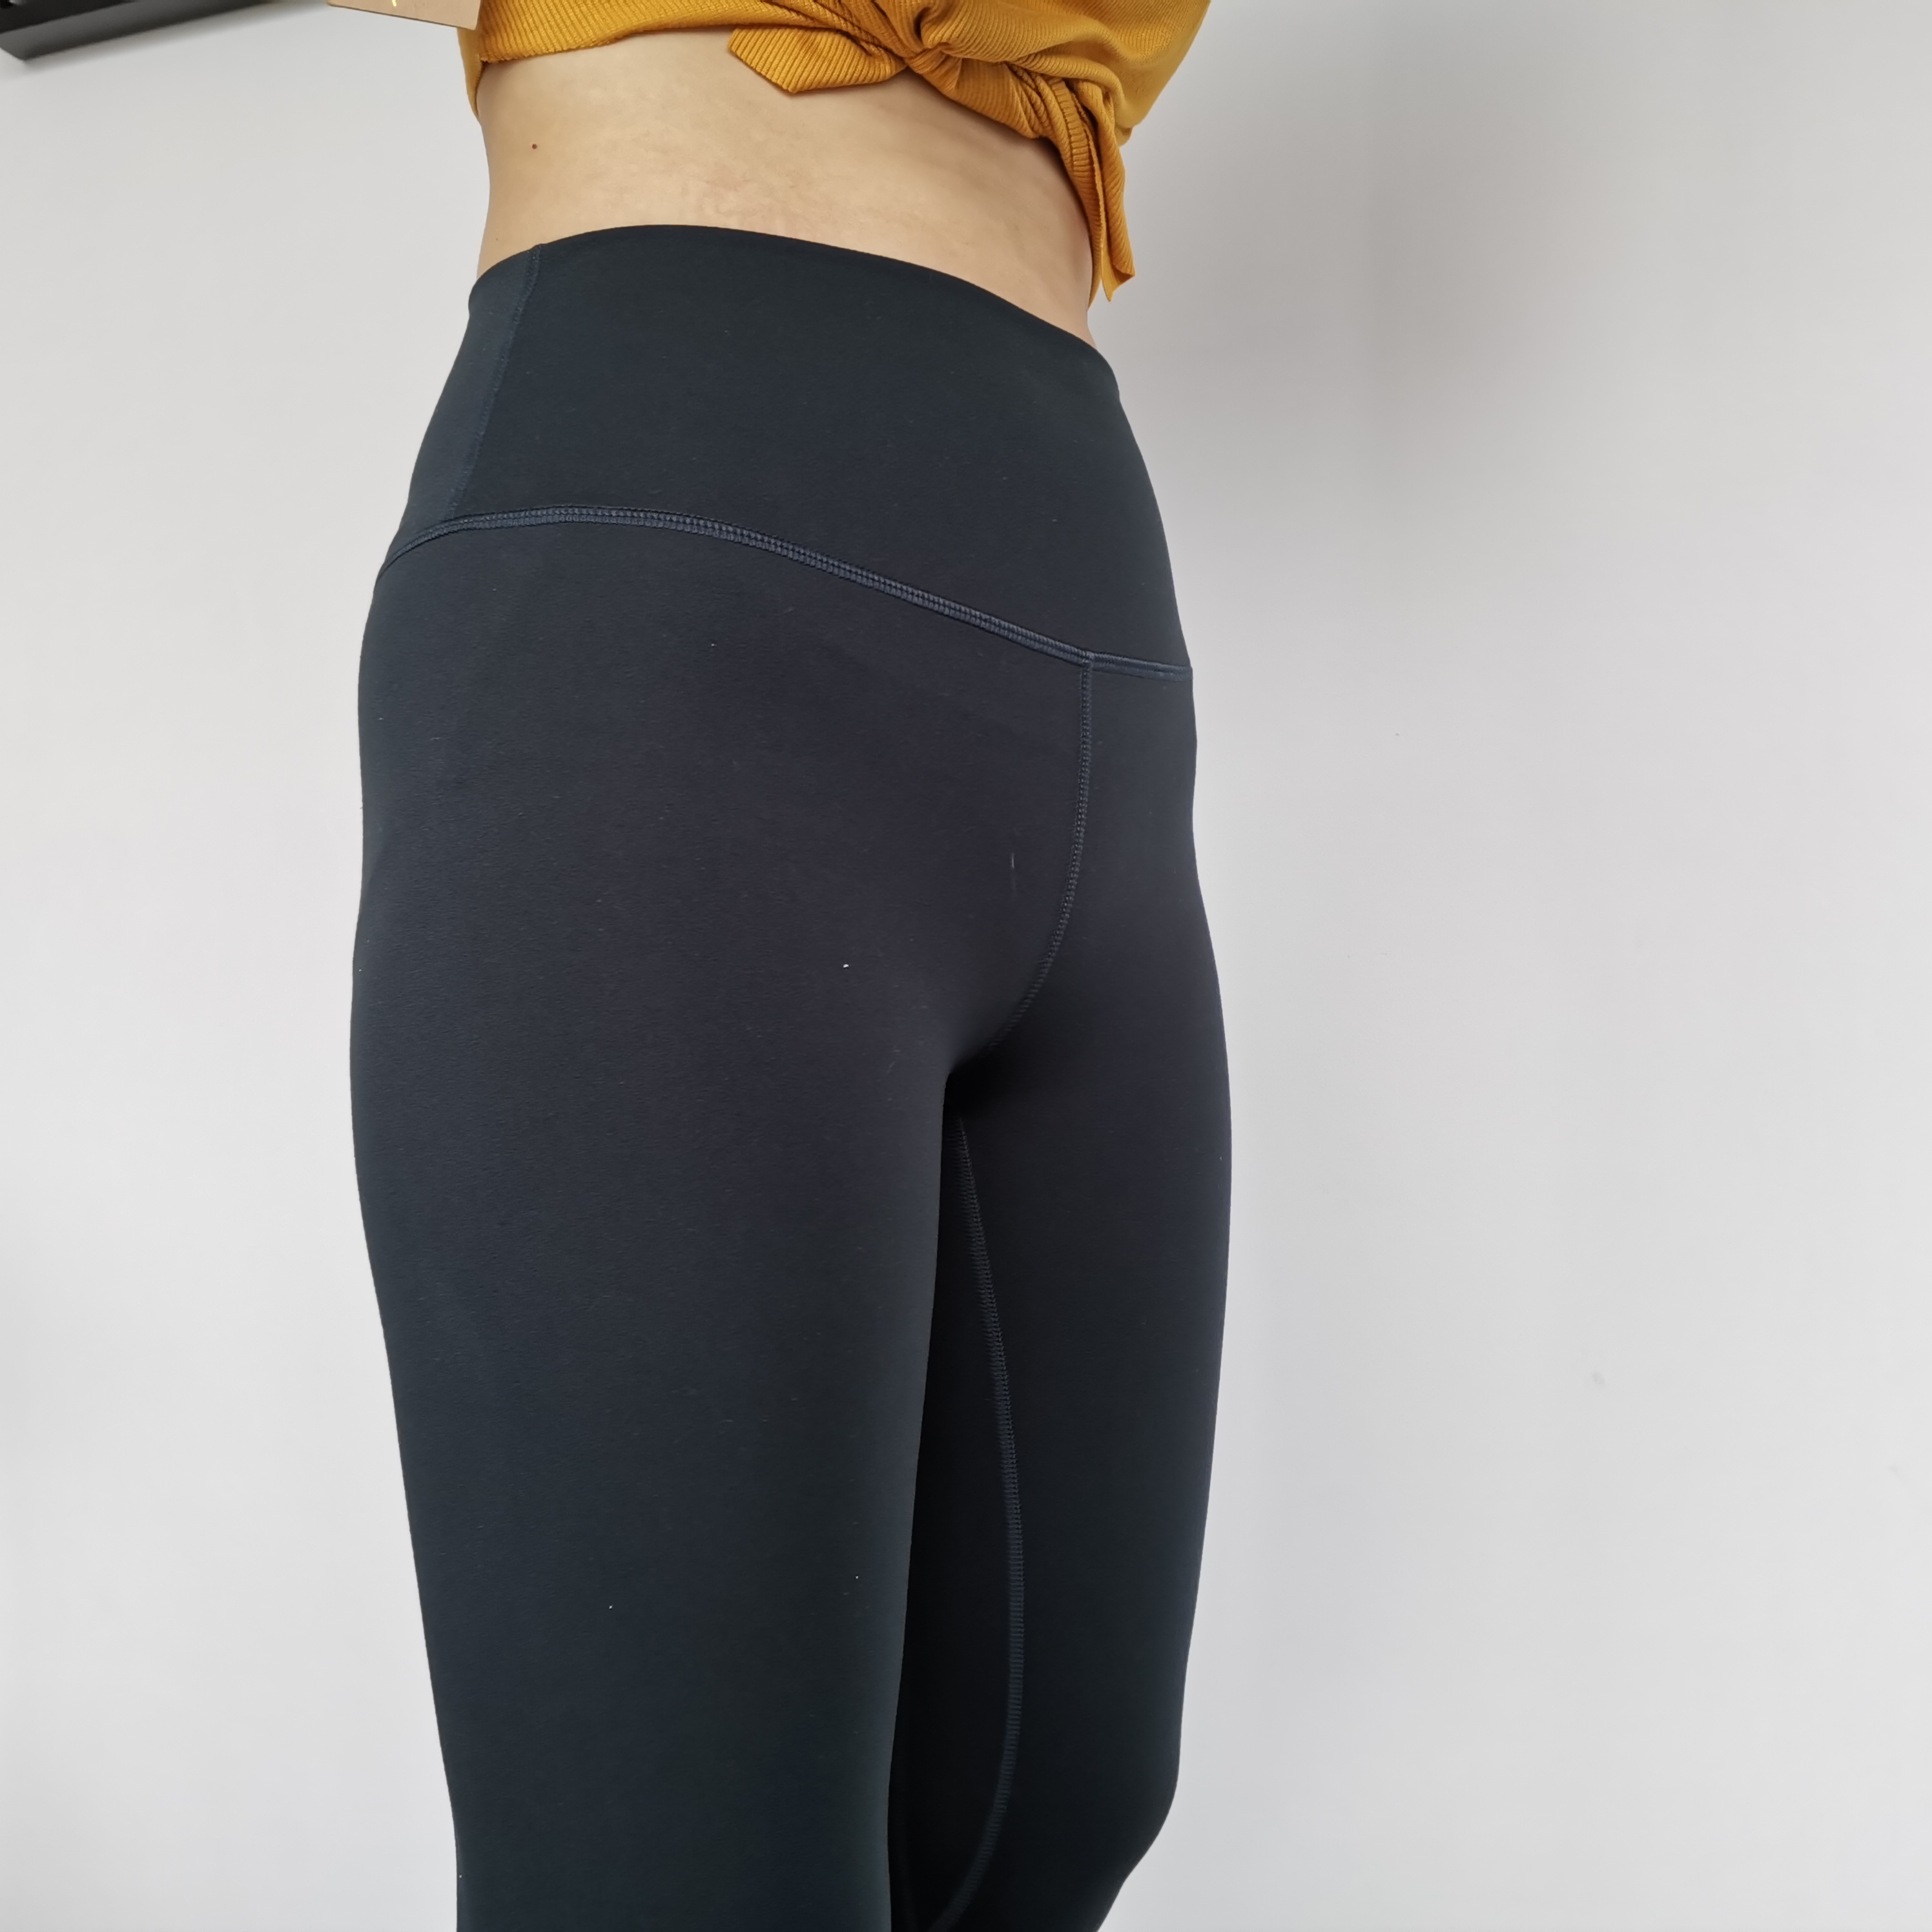 RE01 recycled legging RPET workoutwear REPREVE sport legging women